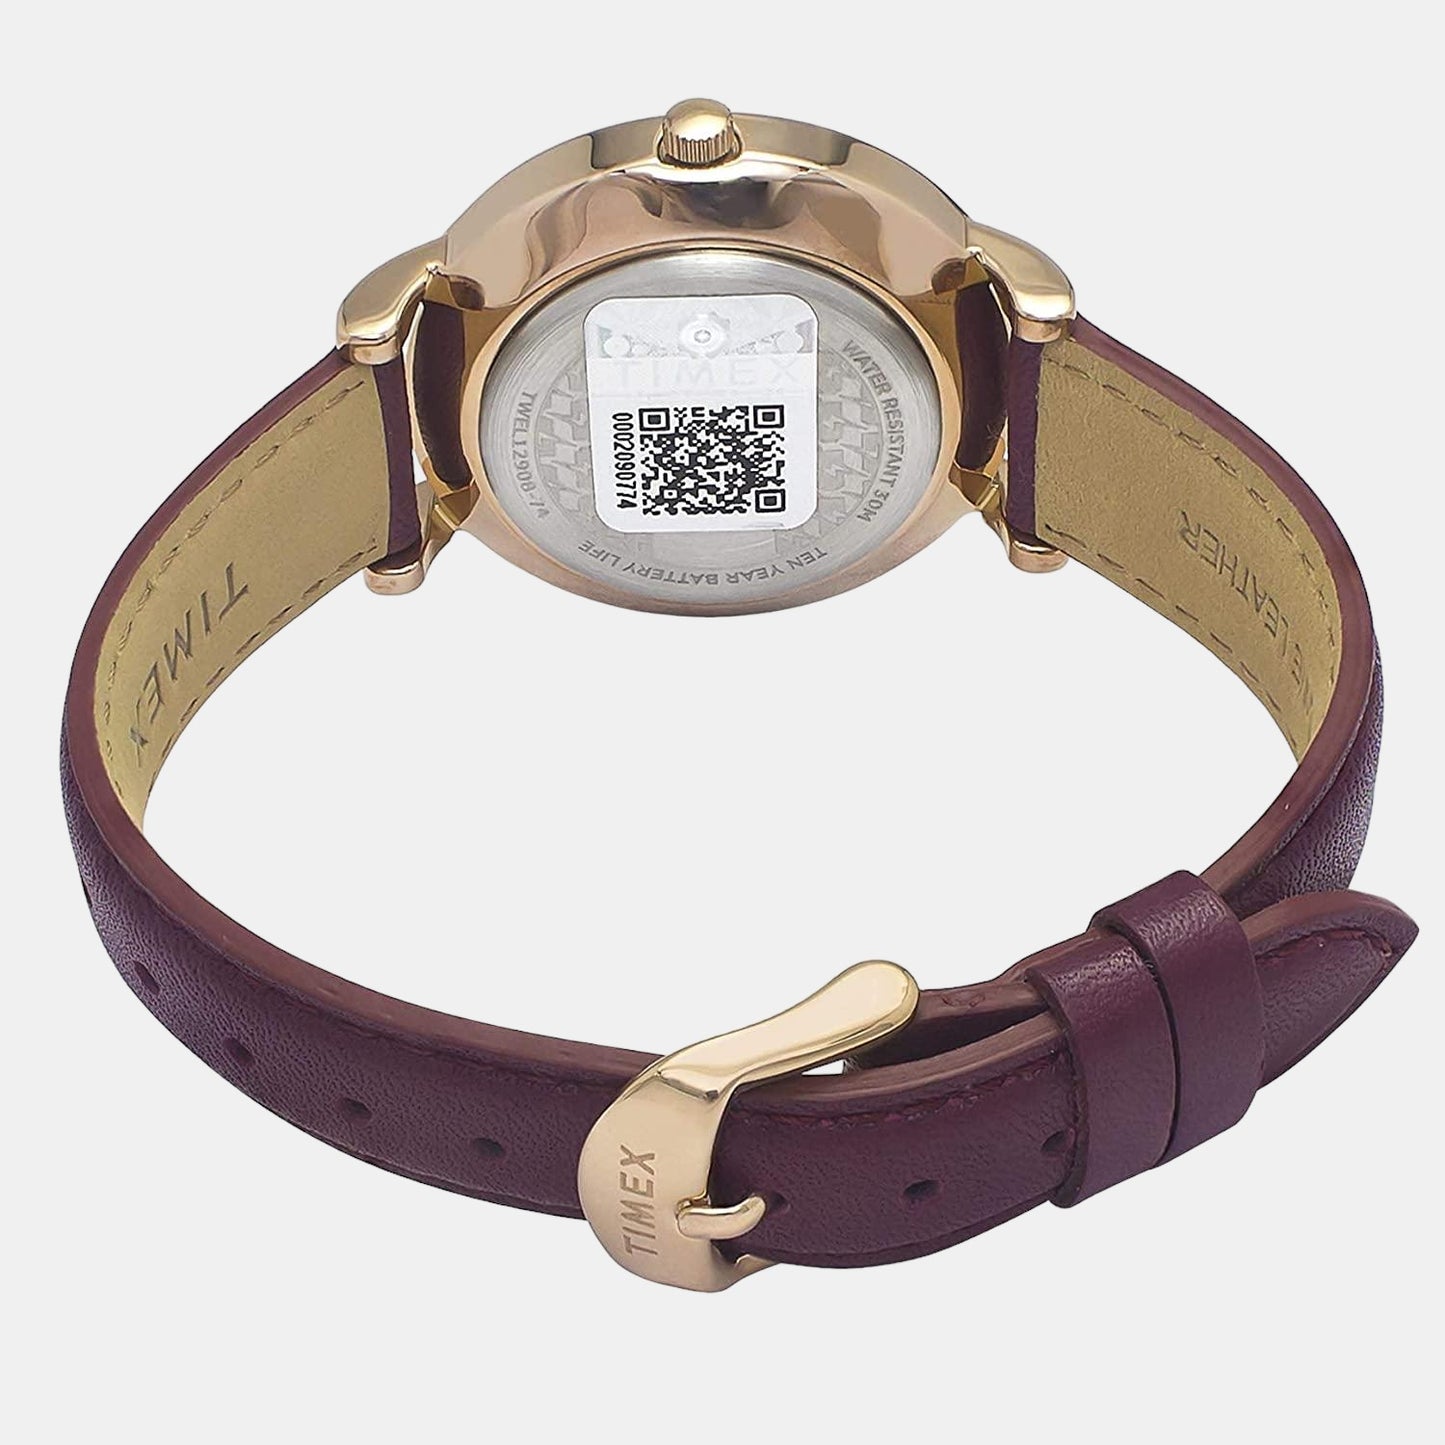 timex-brass-silver-analog-female-watch-twel12908